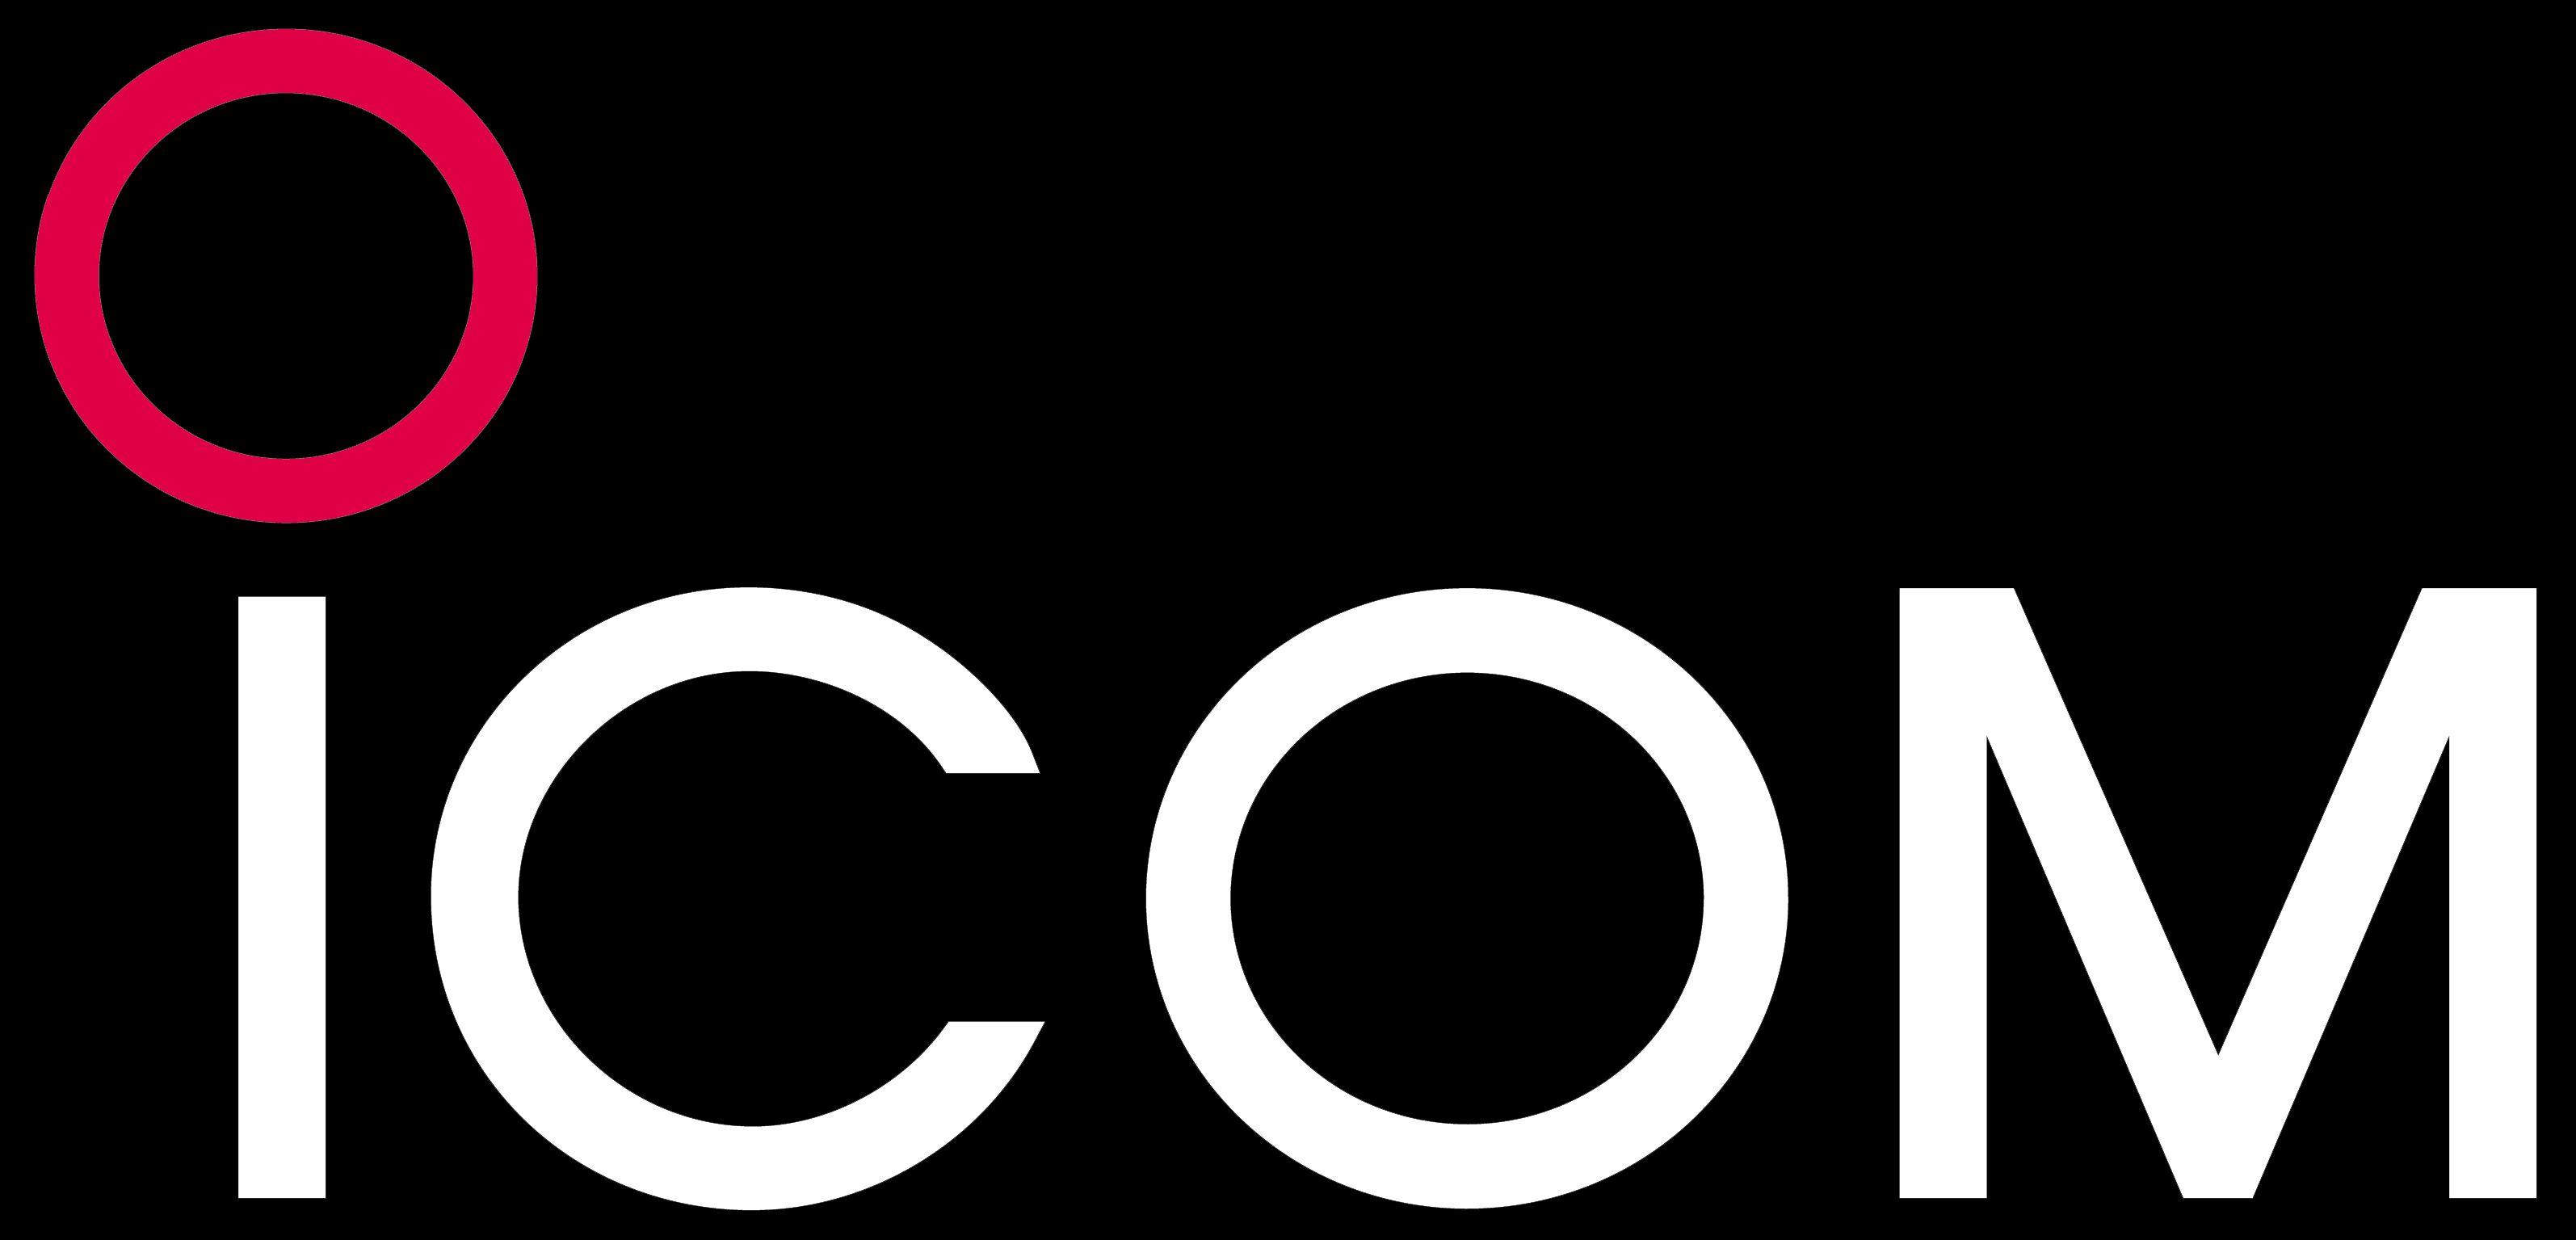 Icom Logo - Icom Image Bank